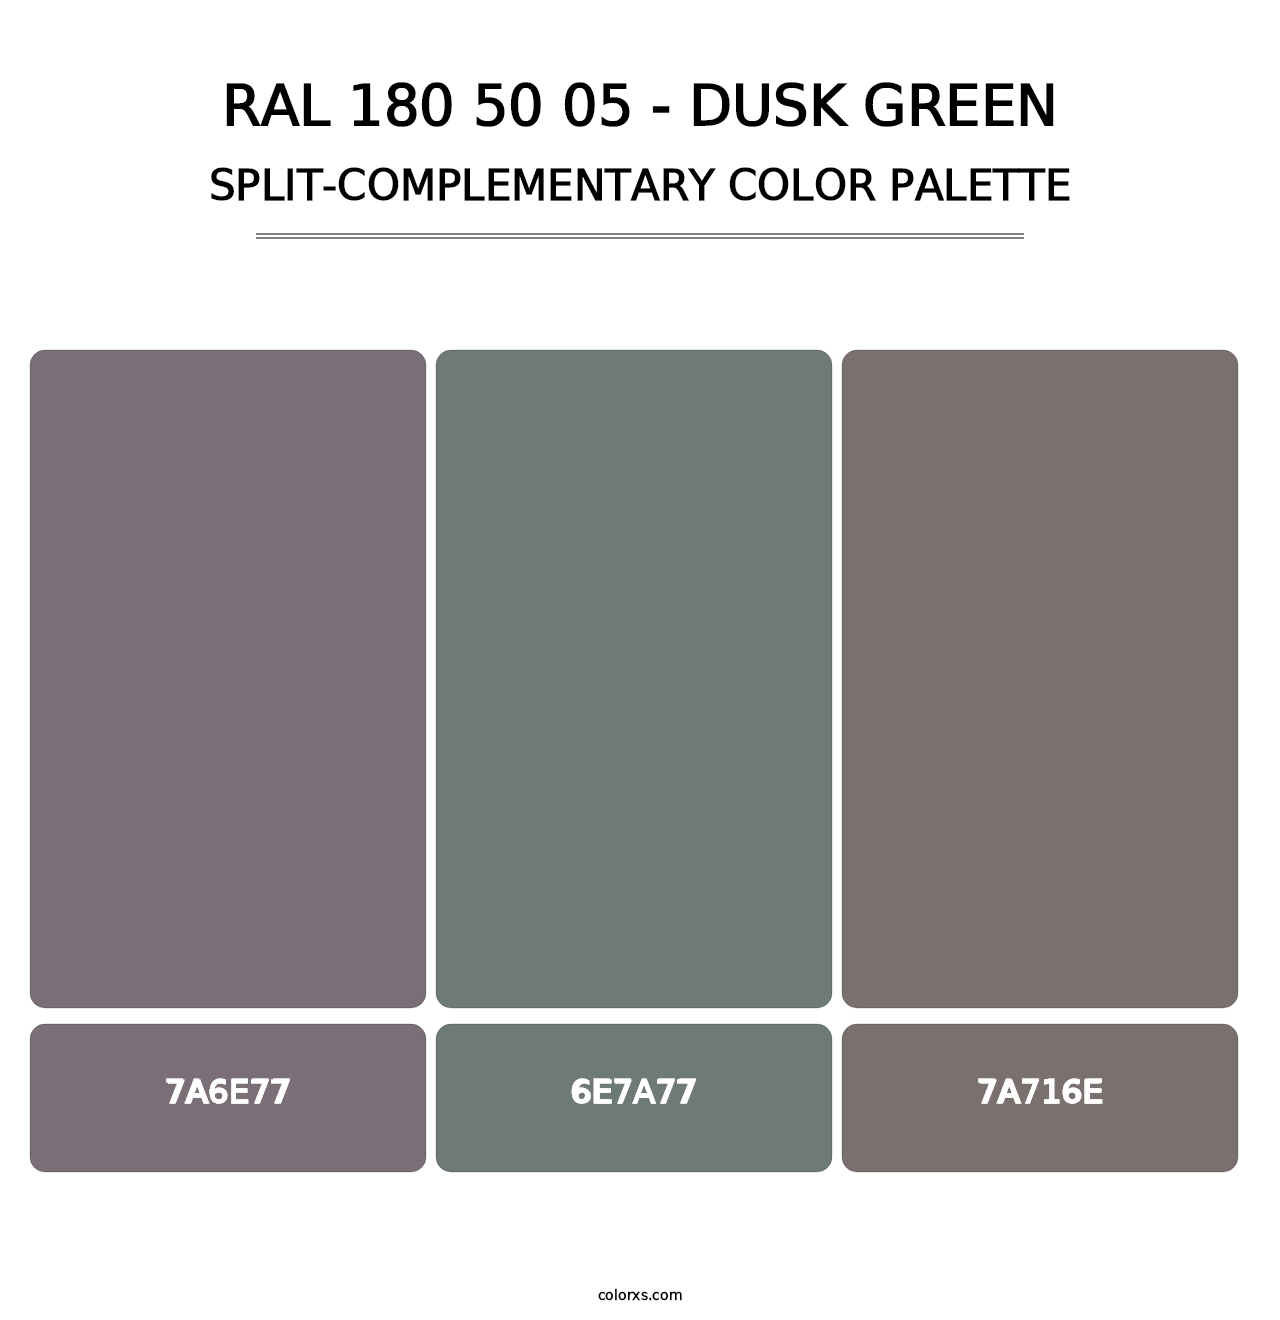 RAL 180 50 05 - Dusk Green - Split-Complementary Color Palette